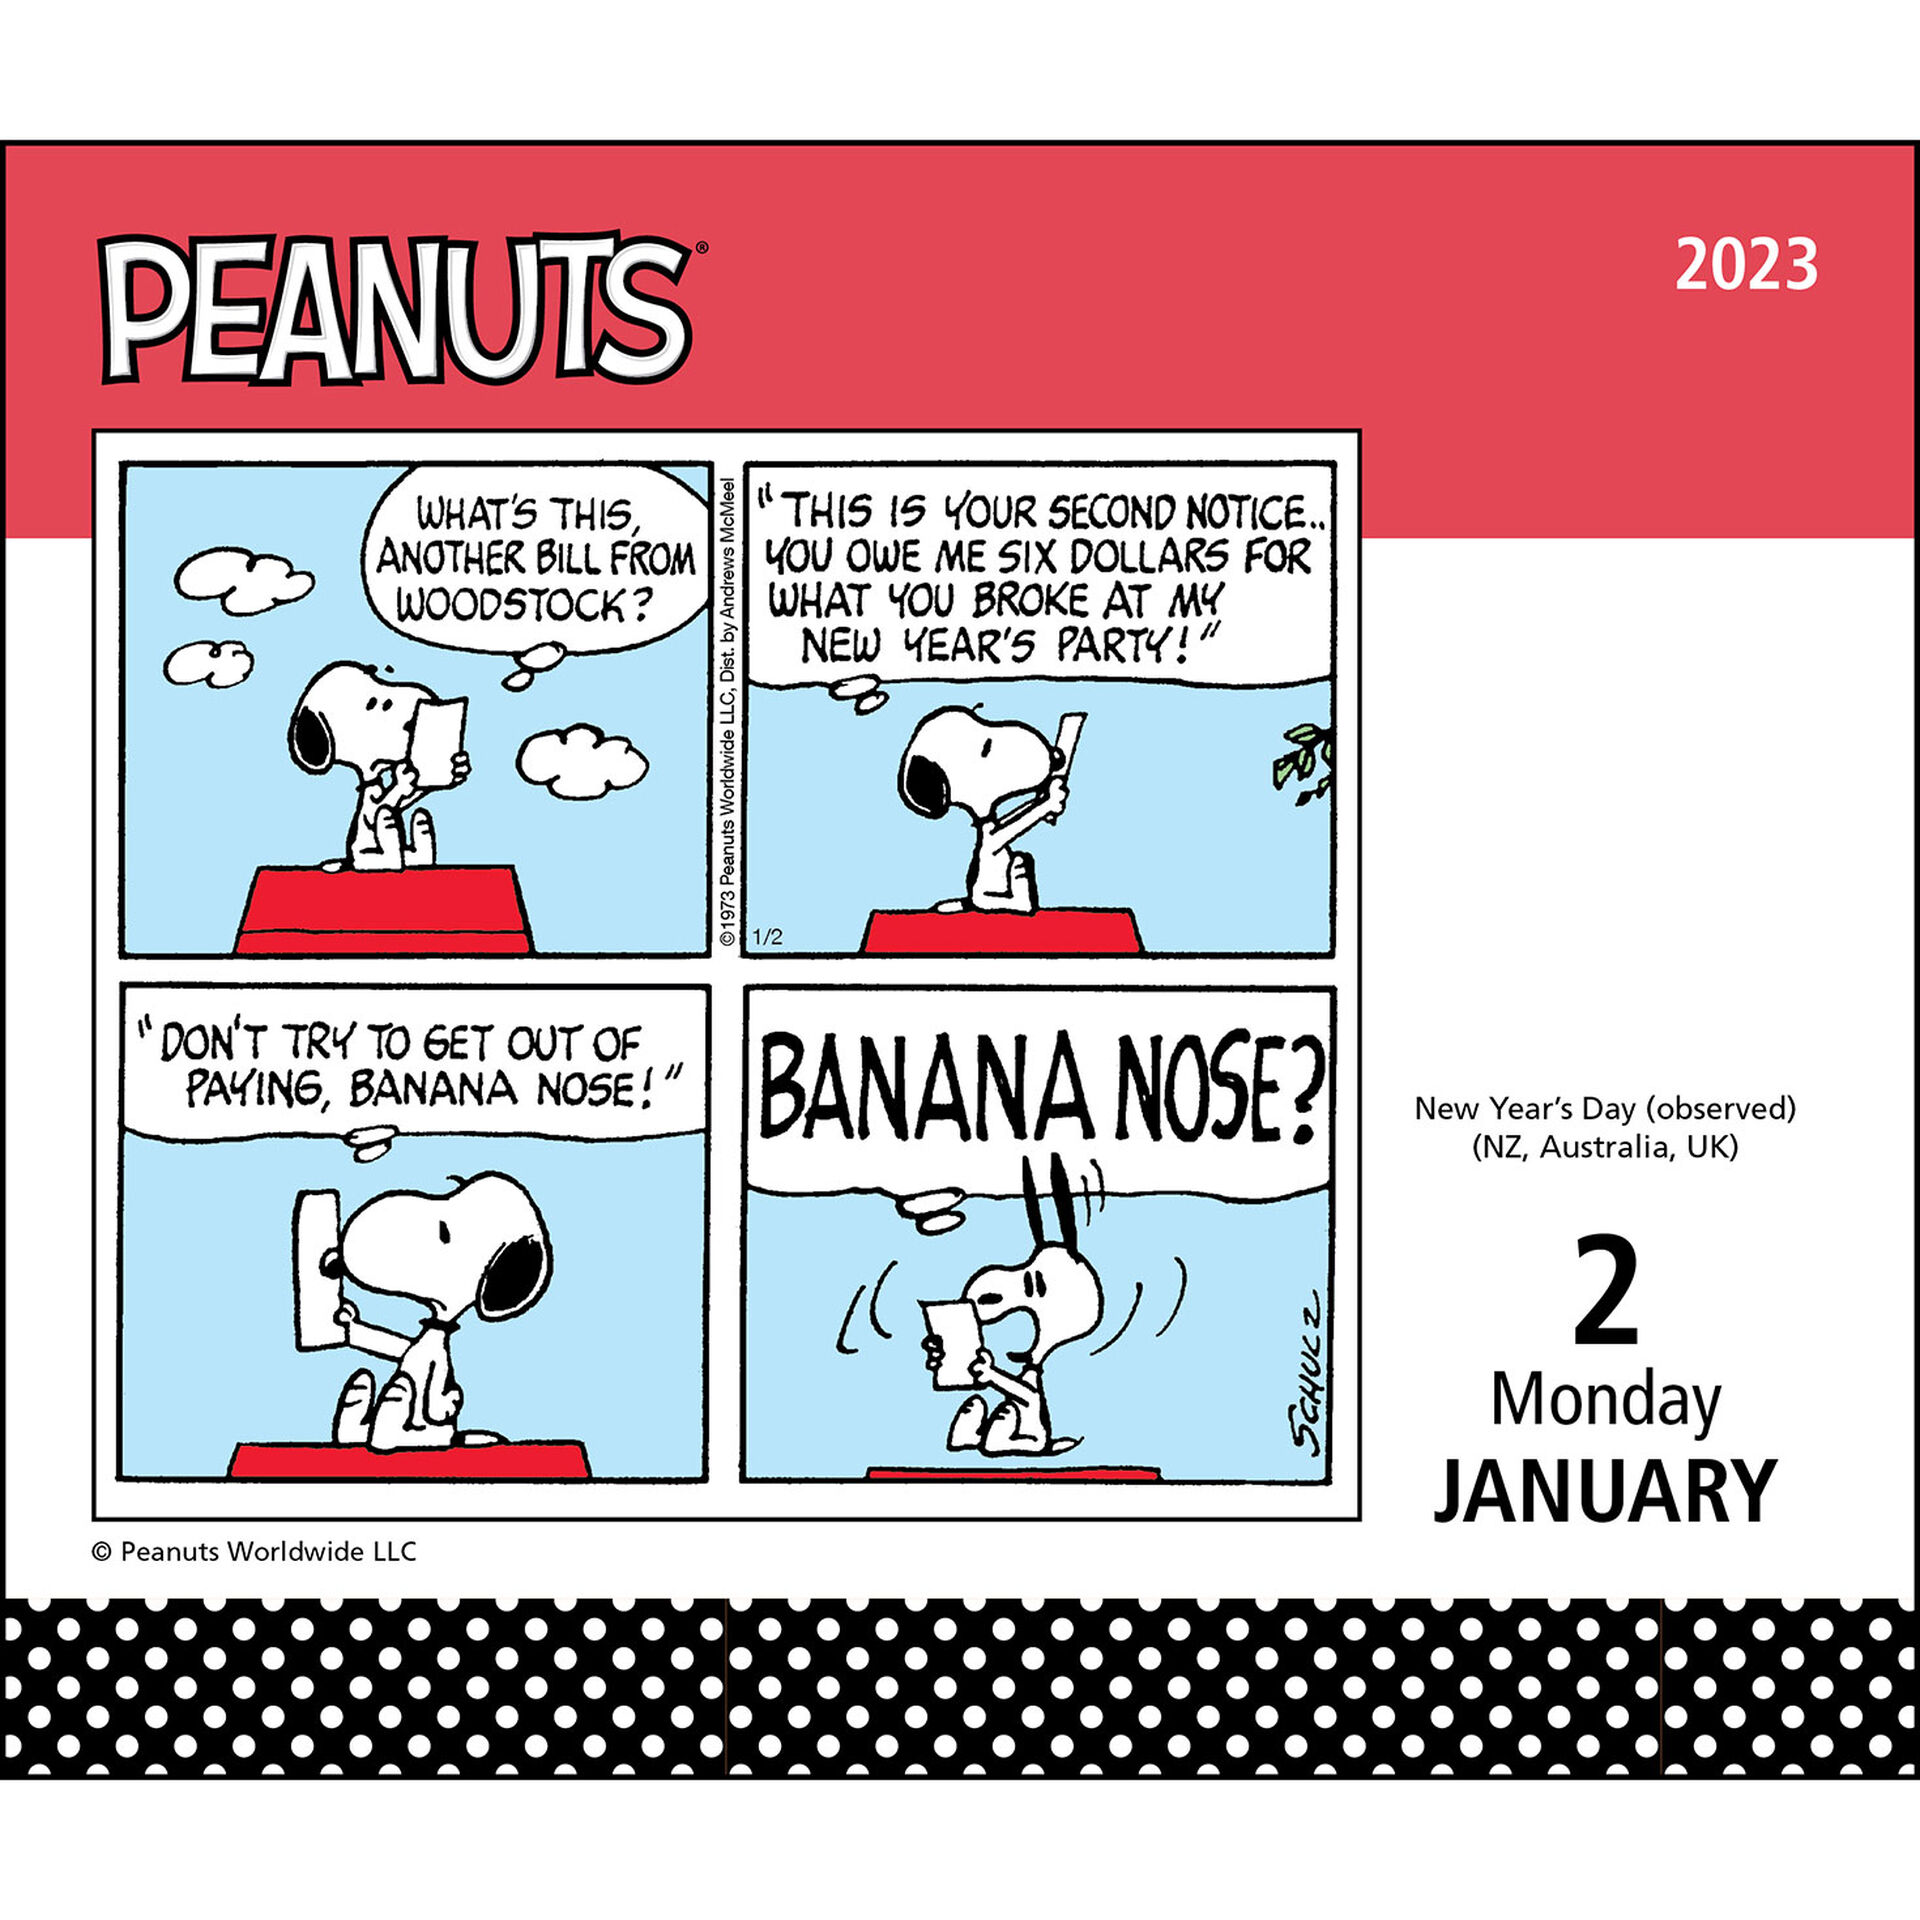 Peanuts 2023 Daily Desktop Calendar Calendars & Planners Hallmark